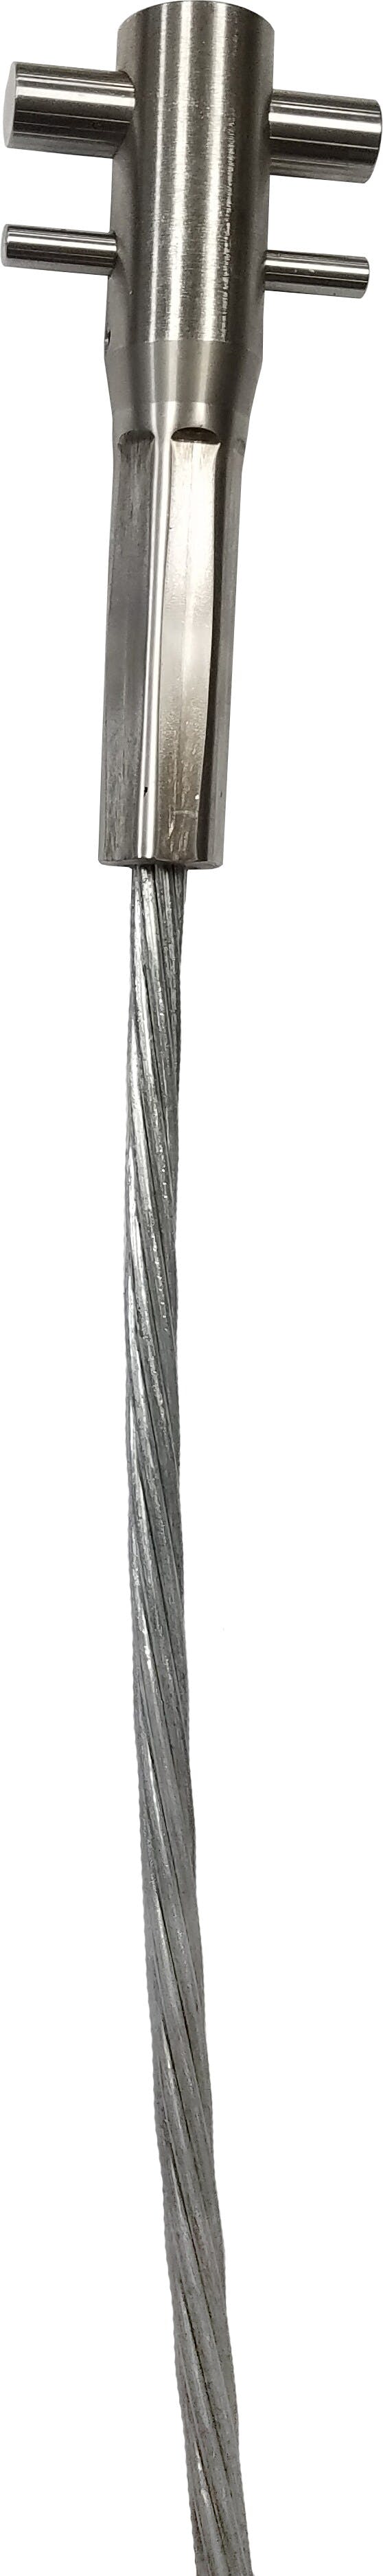 3M™ DBI-SALA® Lad-Saf™ Swaged Cable 6115009, 3/8 Inch, Galvanized Steel, 50 m_0